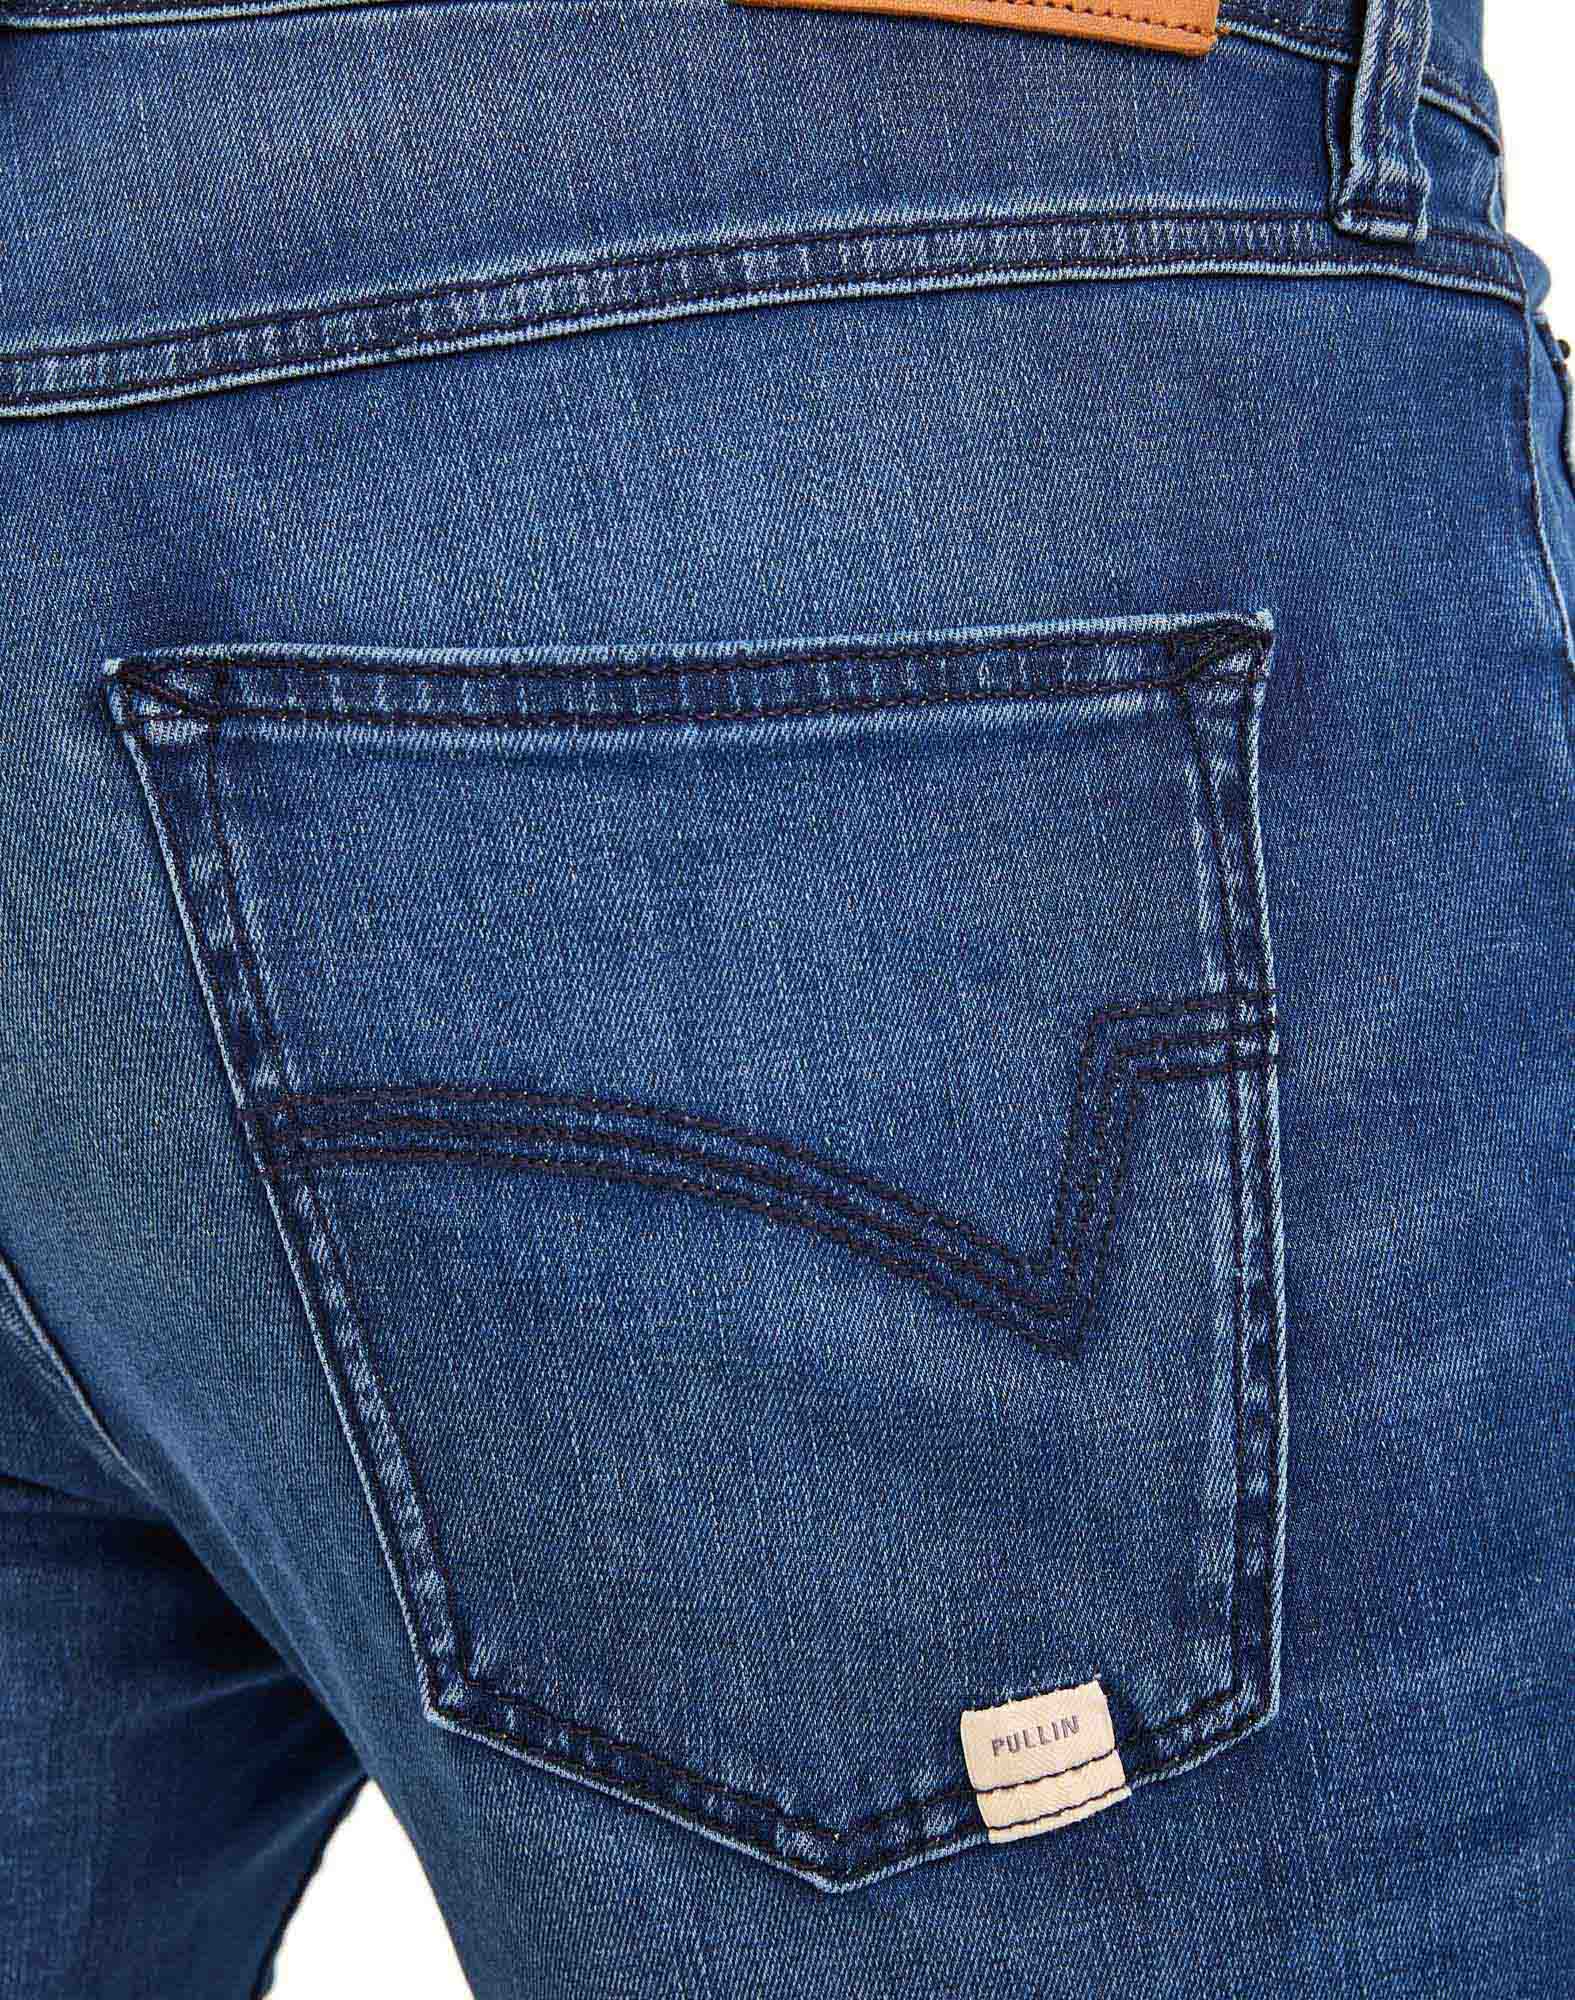 Men's pants DENING CLASSIC STELLAR